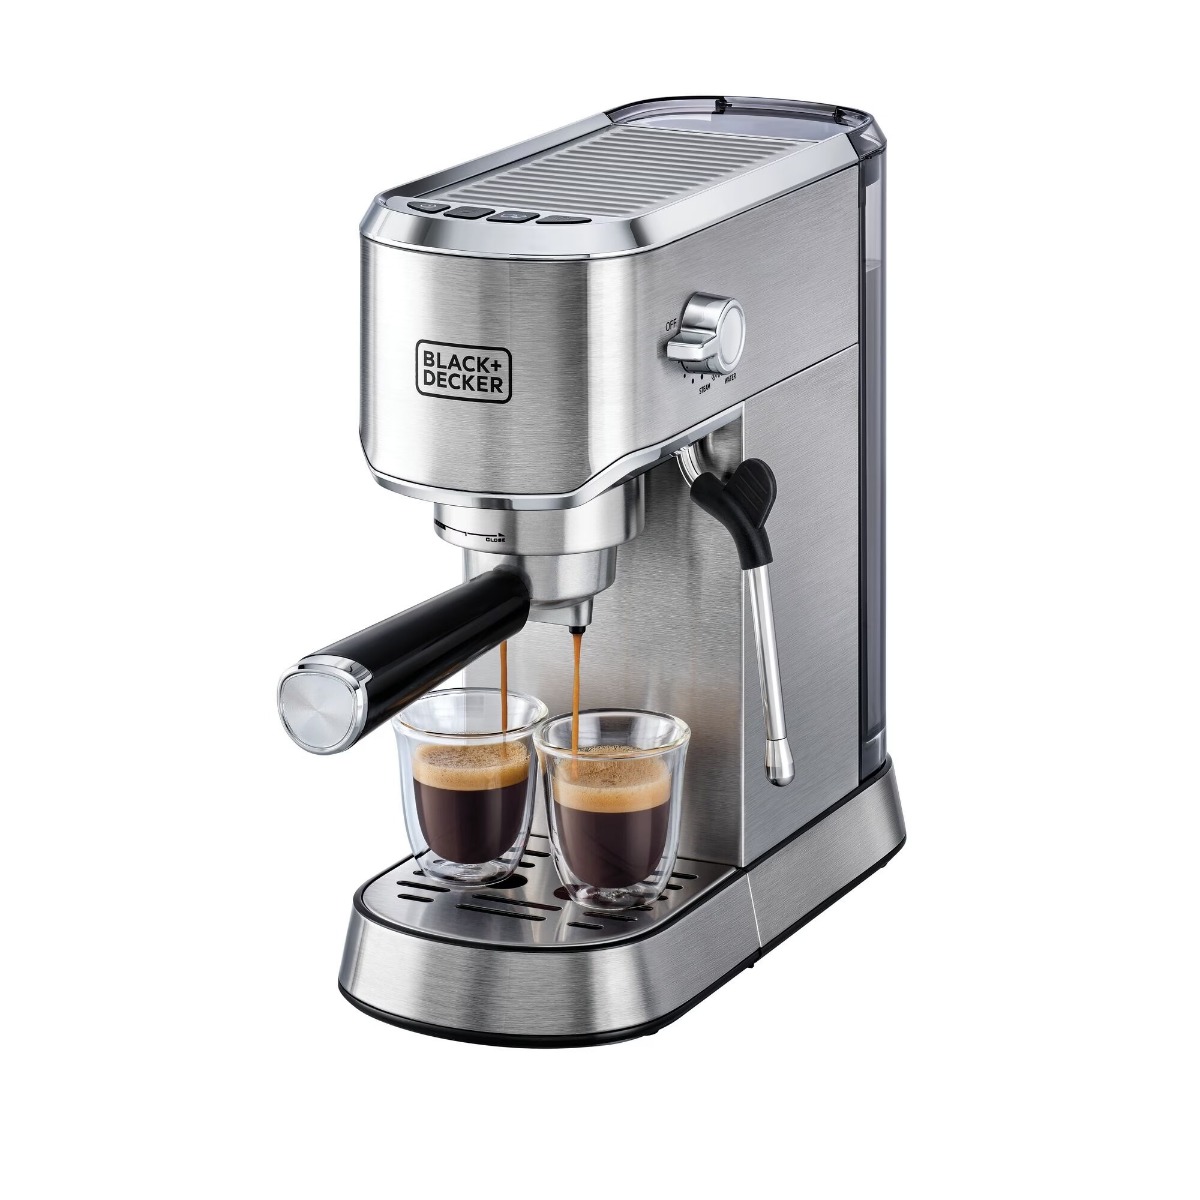 Black + Decker Espresso Machine, 1 Liter, 2 Cups, 1450W, Silver - ECM150-B5